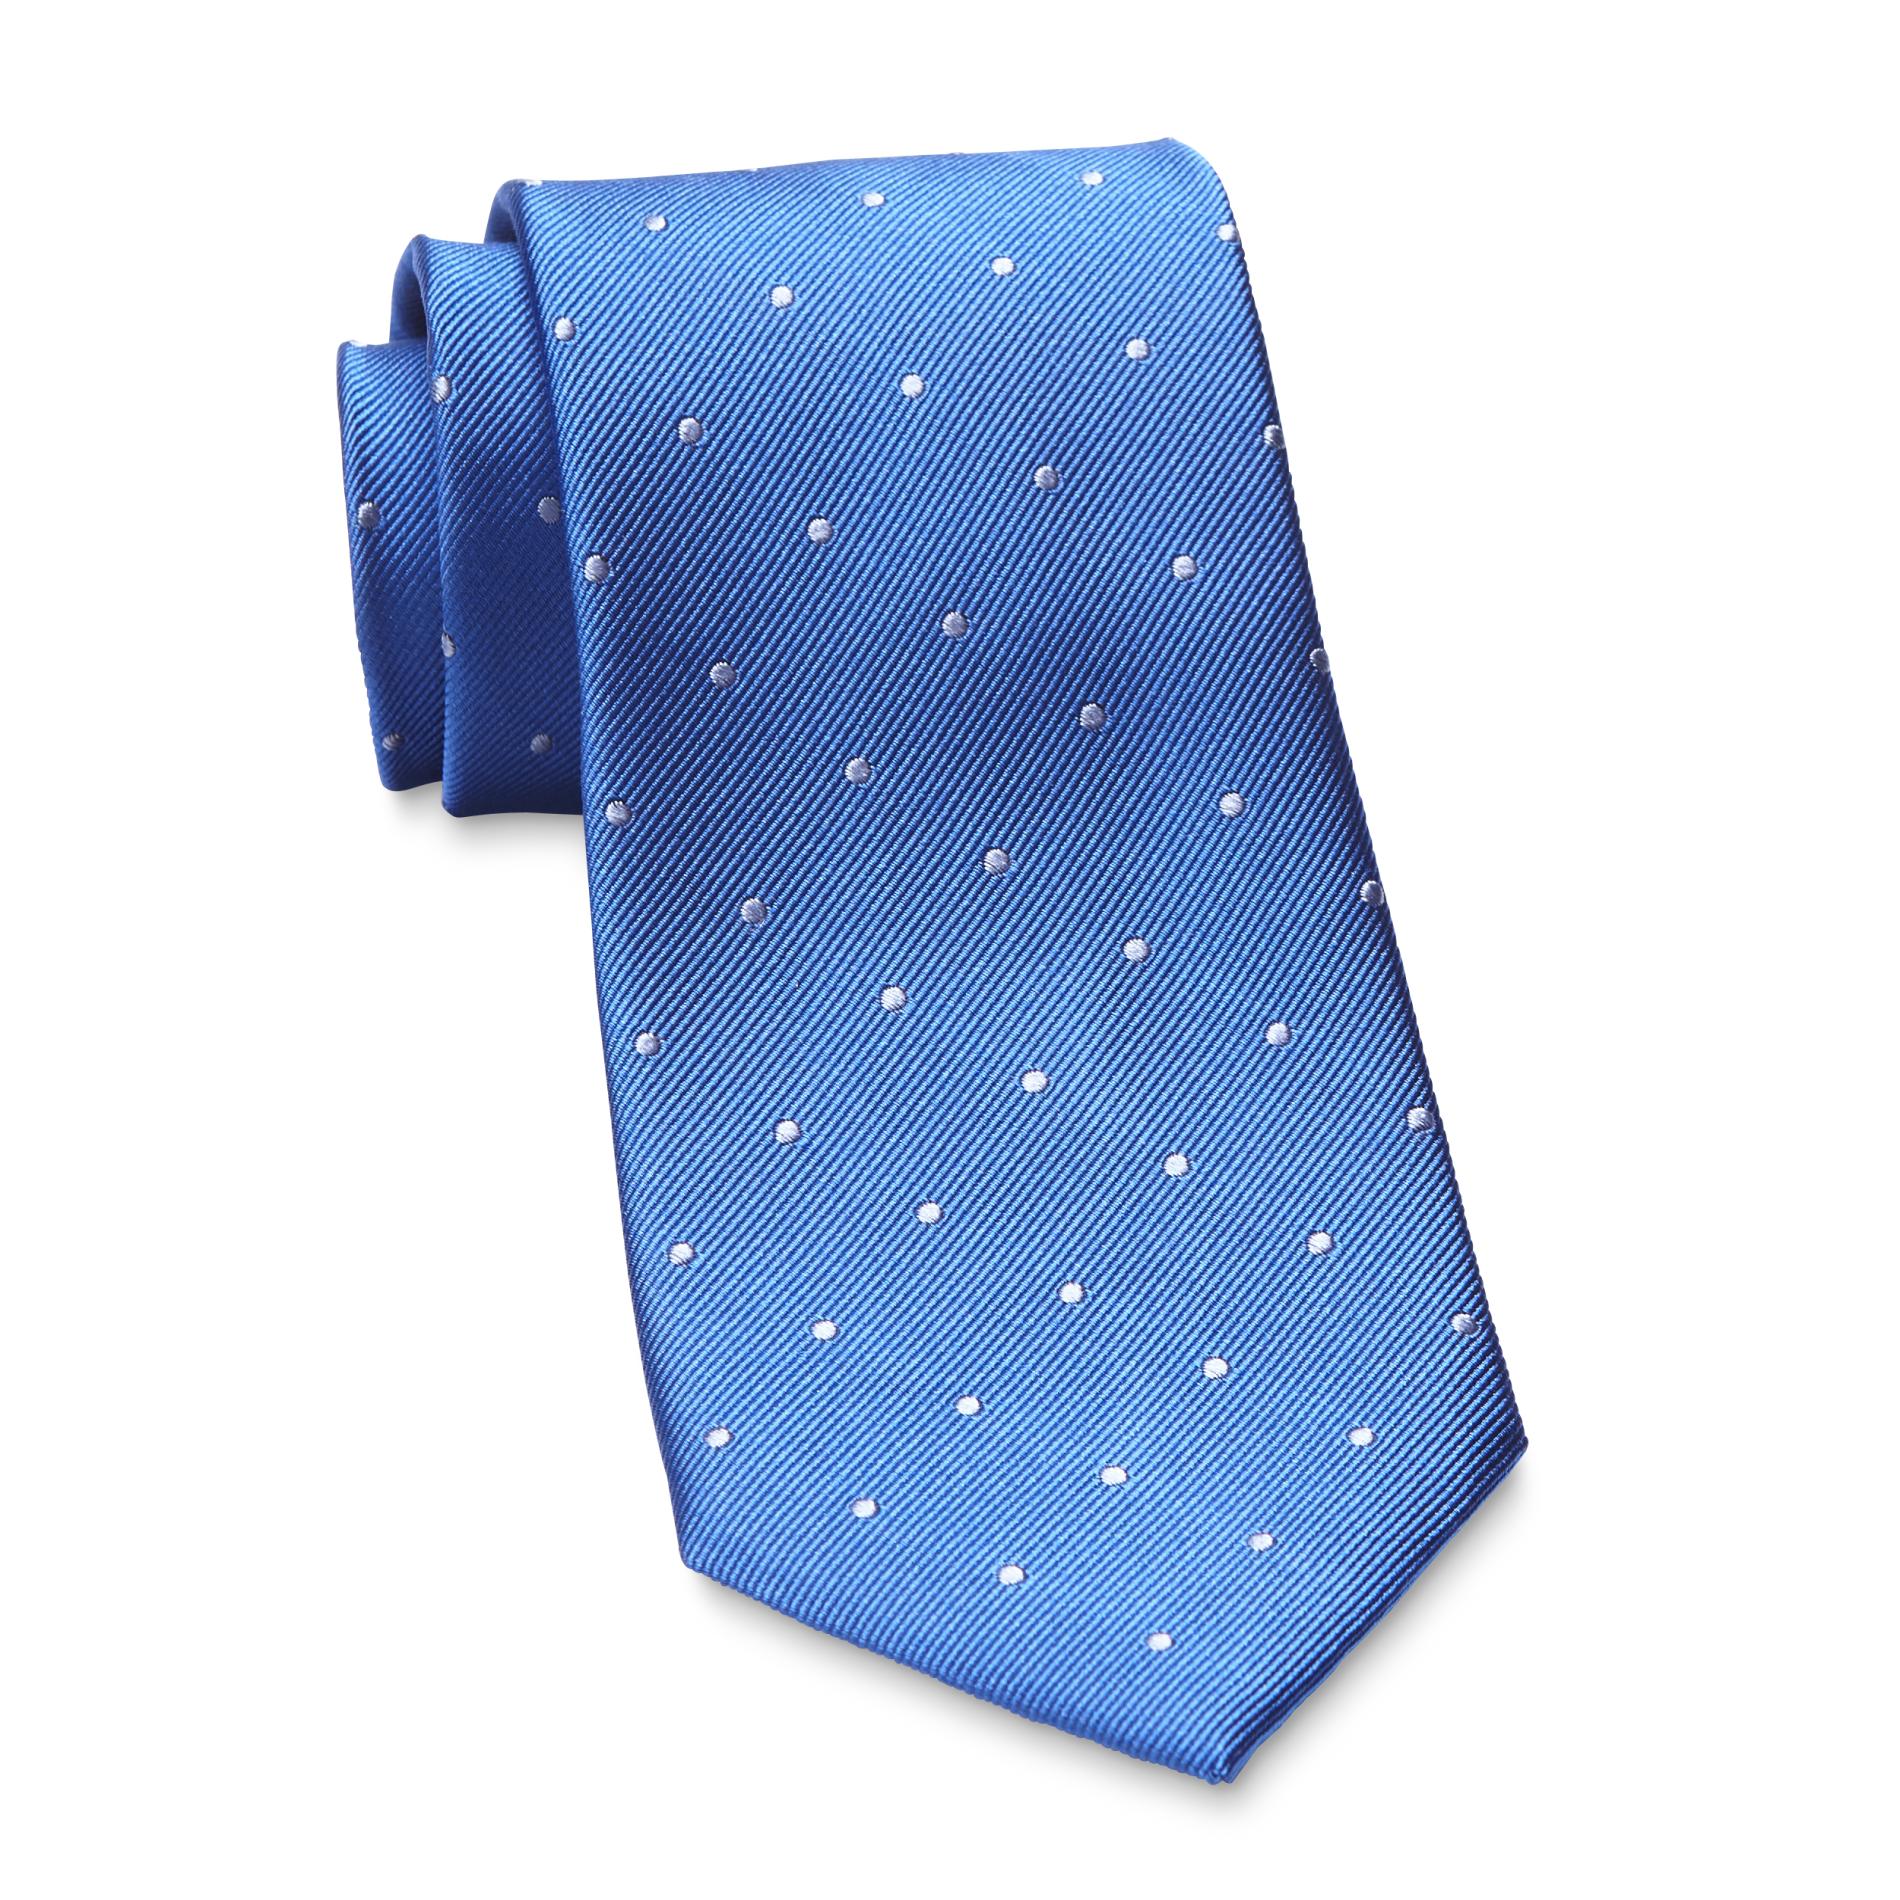 Covington Men's Necktie - Dot